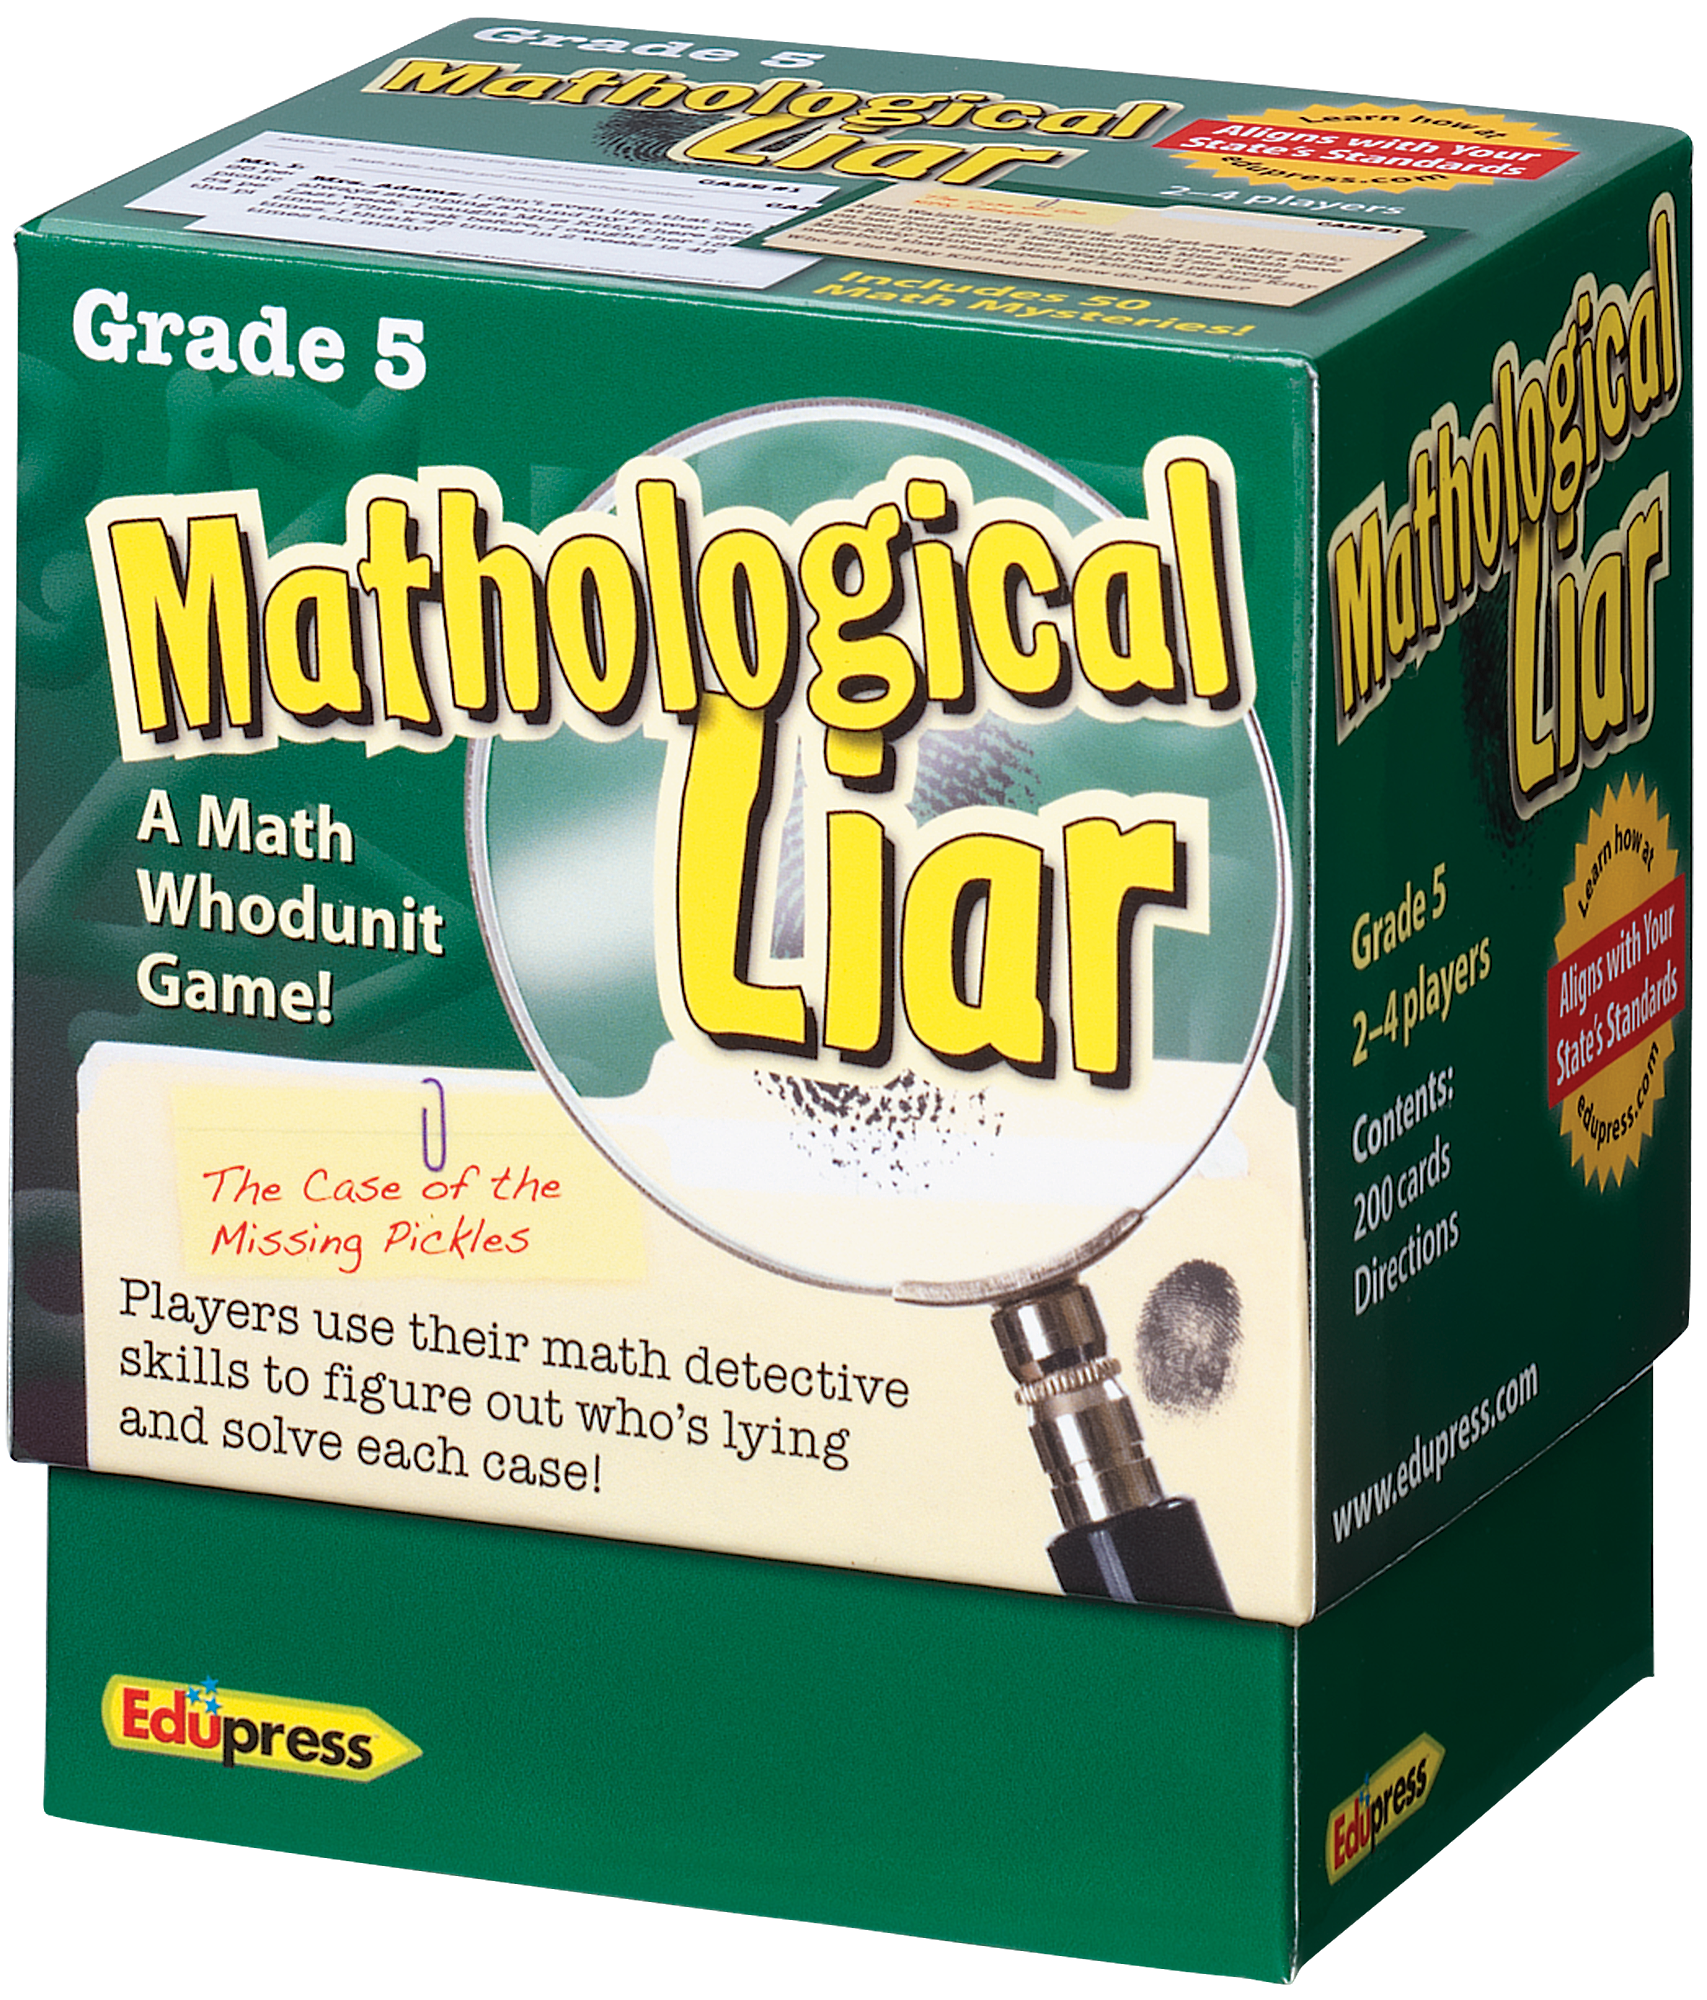 Mathological Liar Game (Gr. 5)